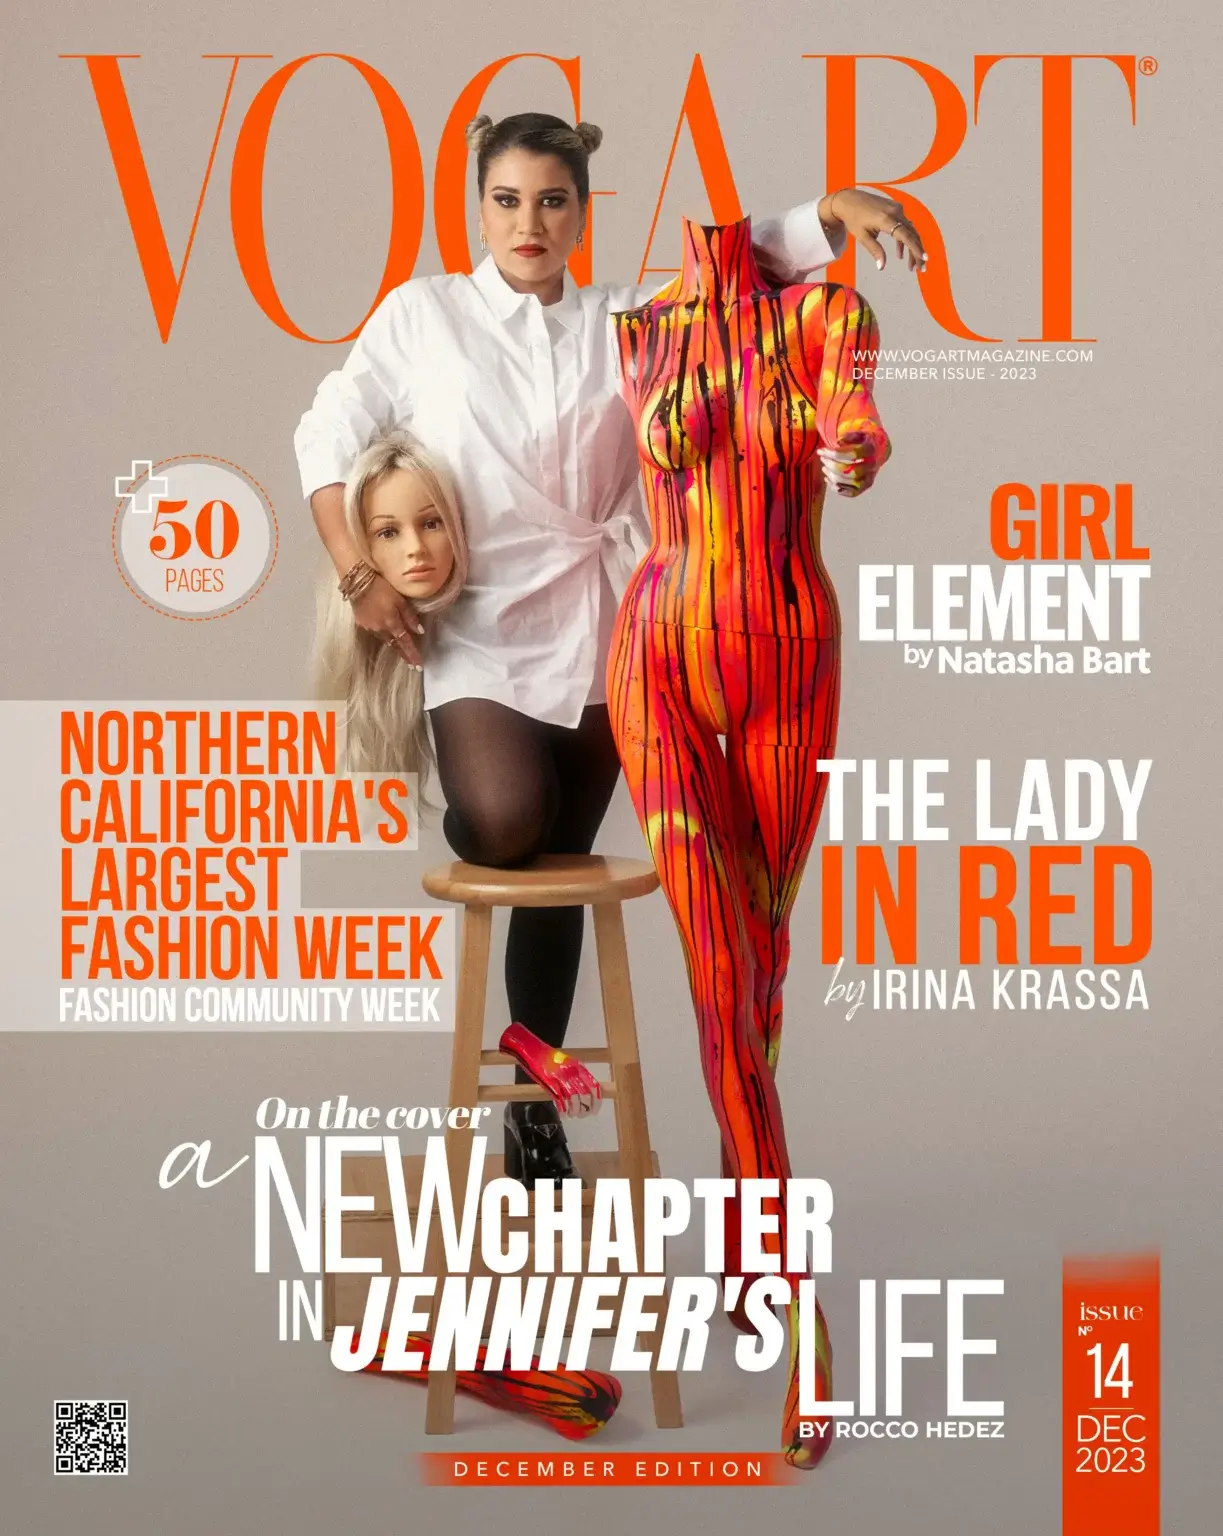 Vogart Magazine December 2023